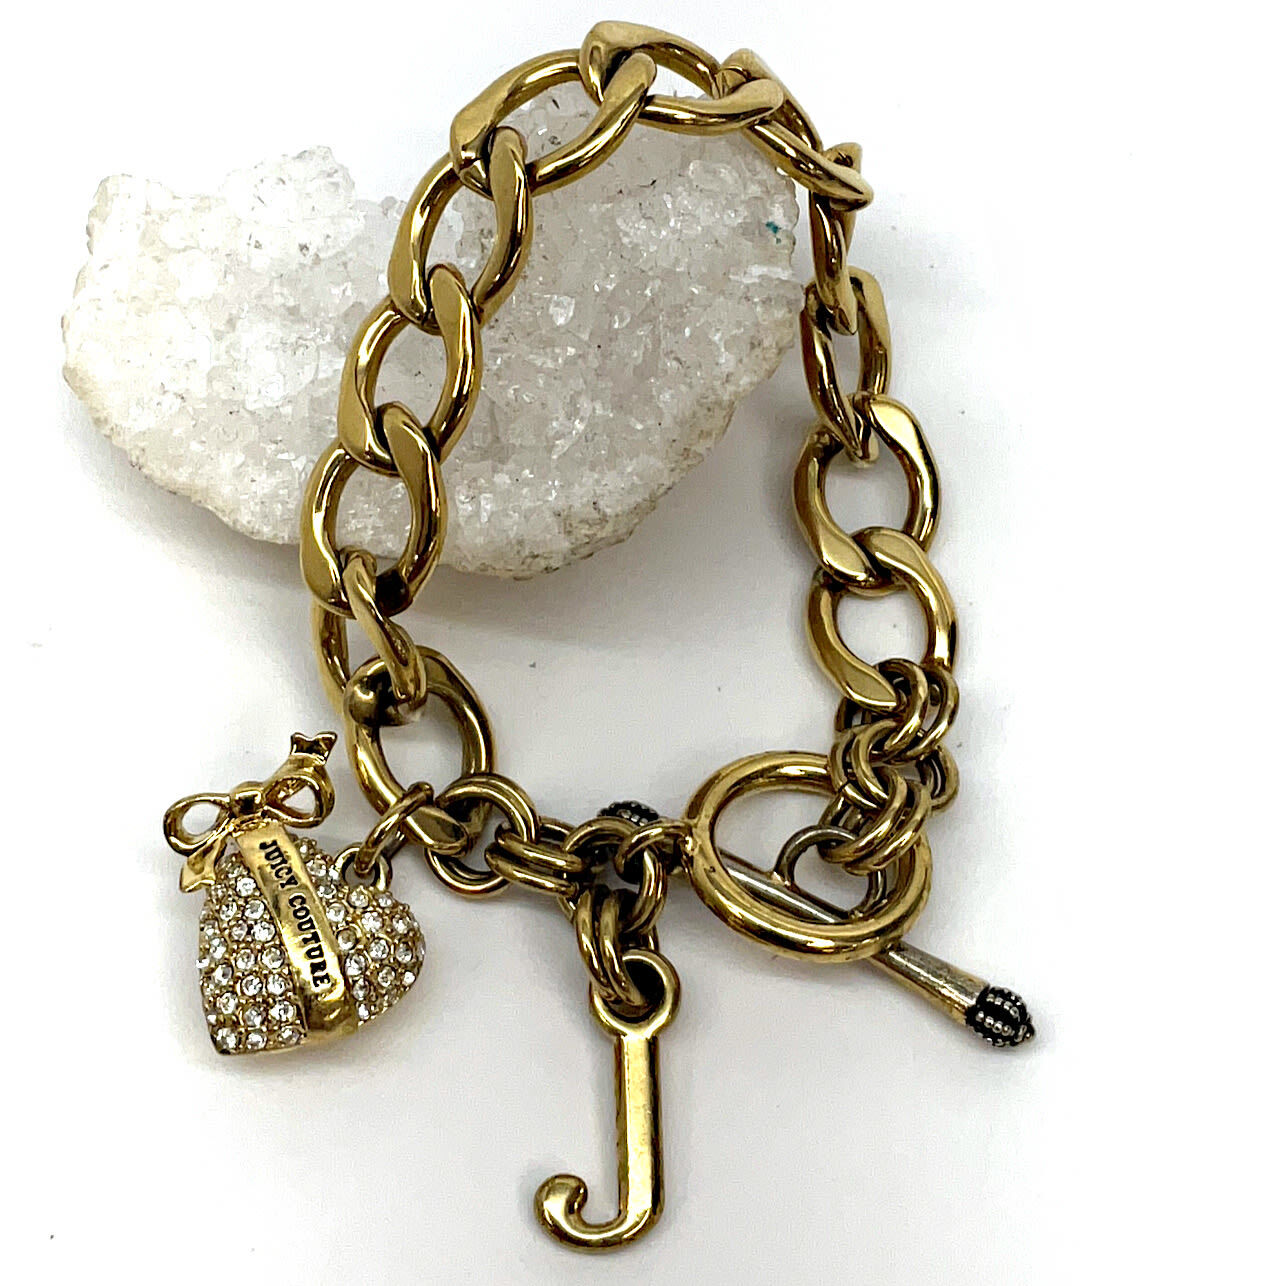 Tiffany & Co. 1837 Silver Toggle Charm Bracelet